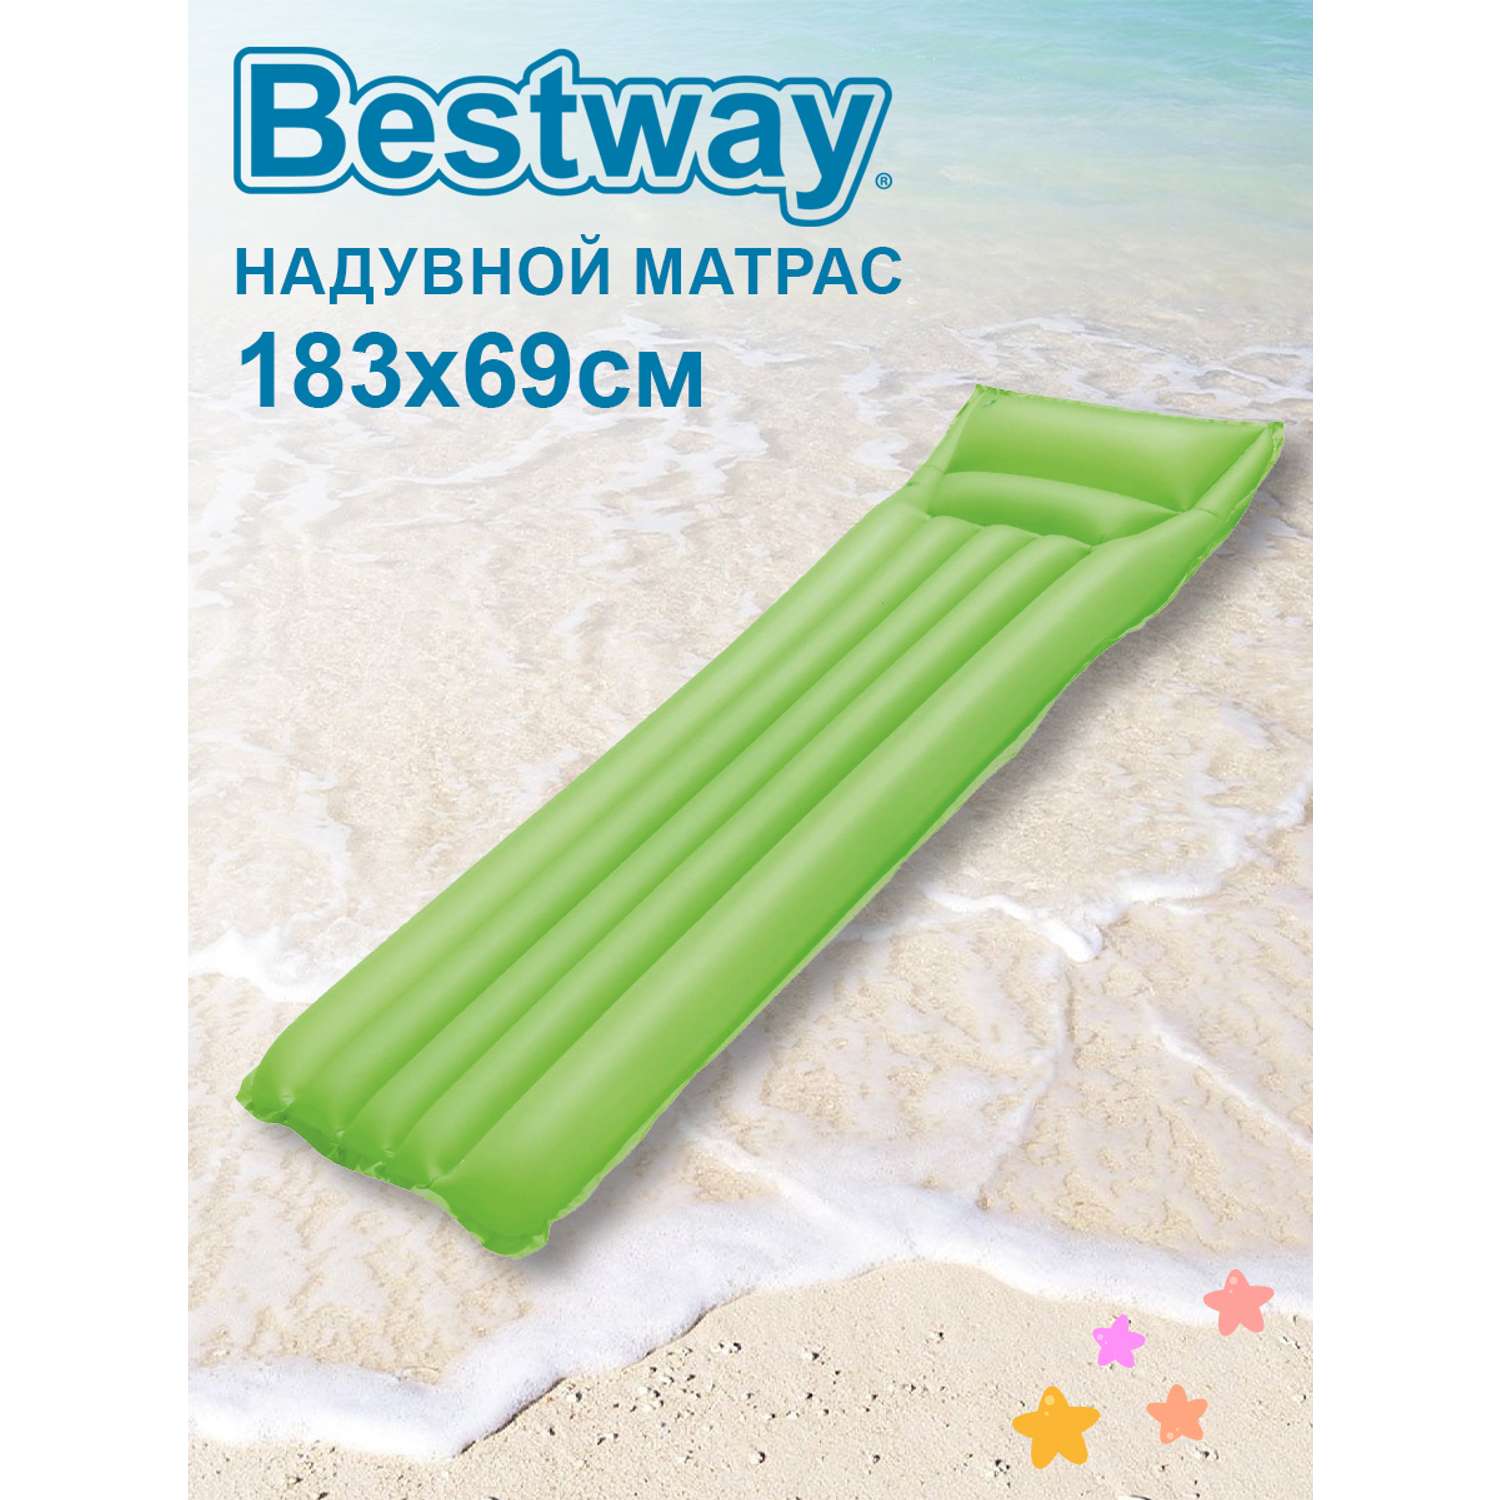 Матрас надувной BESTWAY для плавания 183х69см 44007 зеленый - фото 1